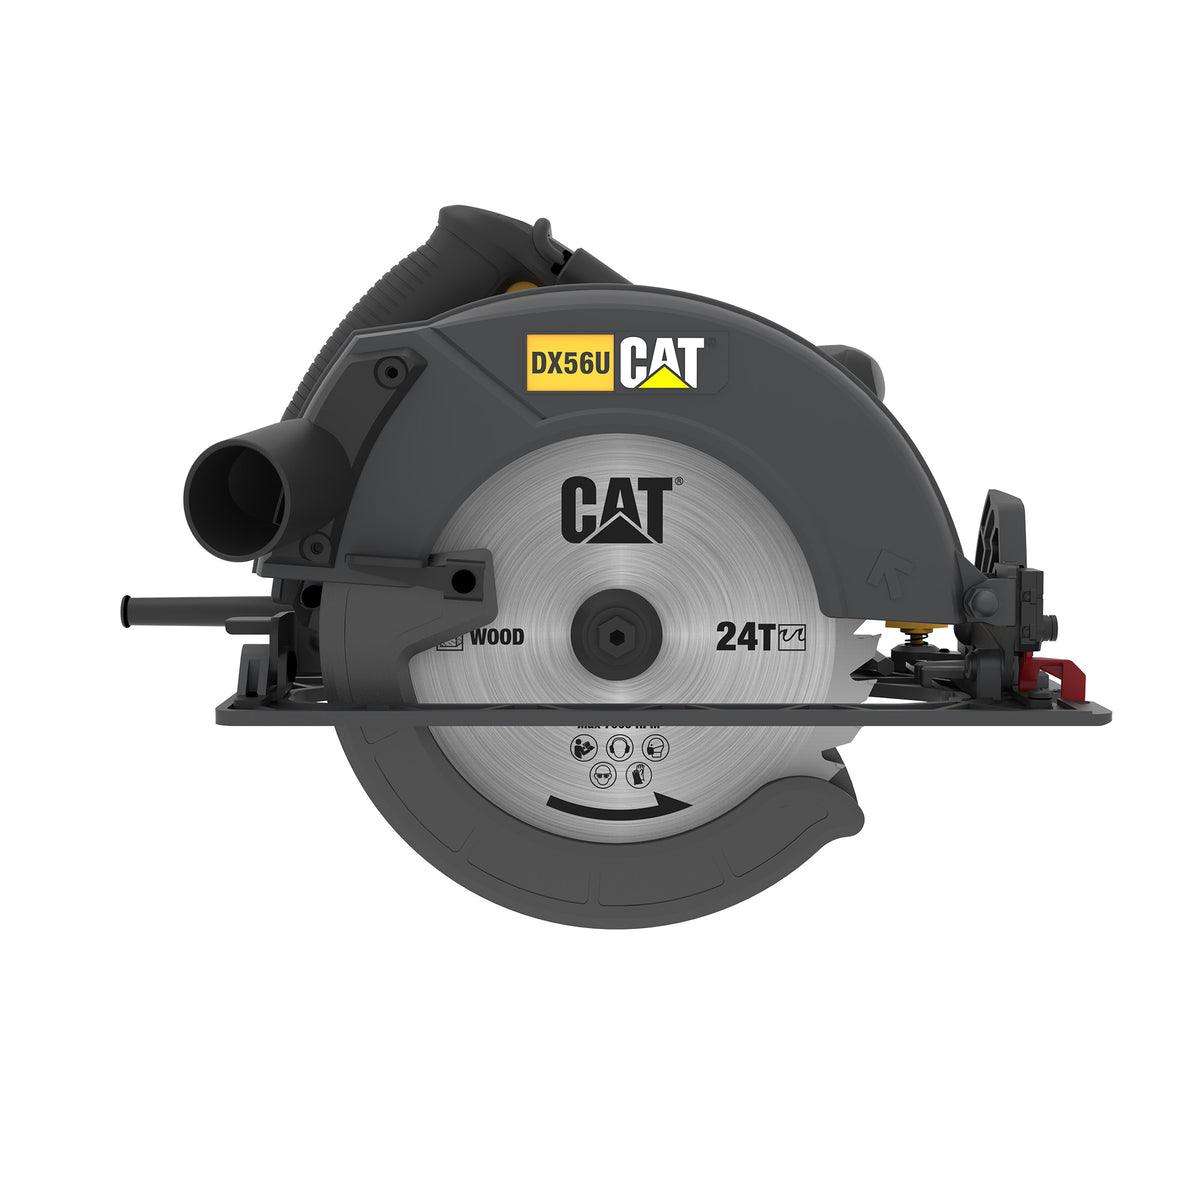 15A 7.25 CORDED CIRCULAR SAW - Cat Power Tools